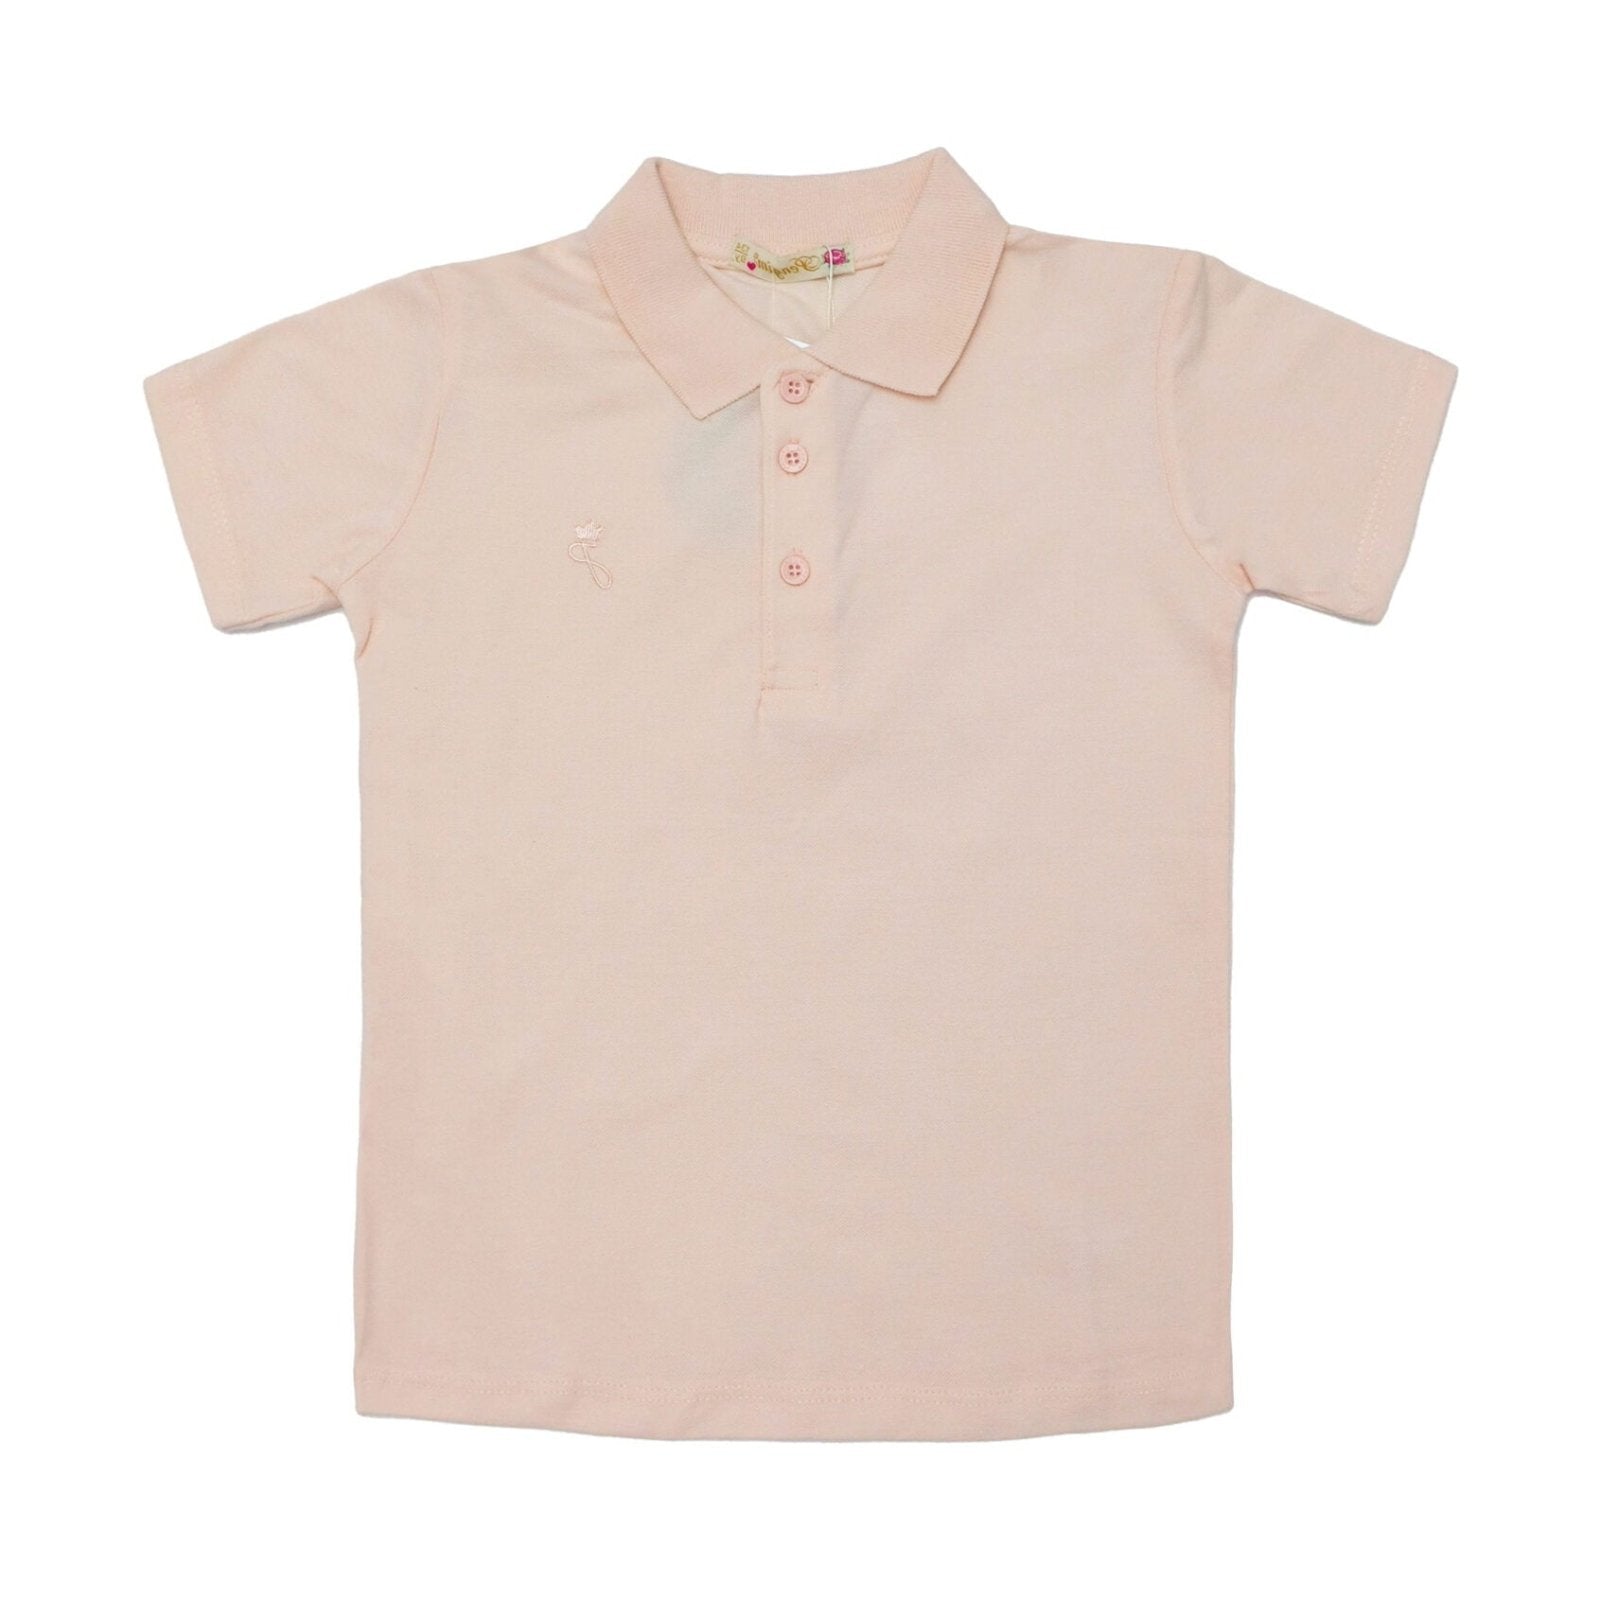 Boys T-Shirt Light Pink Color | Made in Turkey - Zubaidas Mothershop